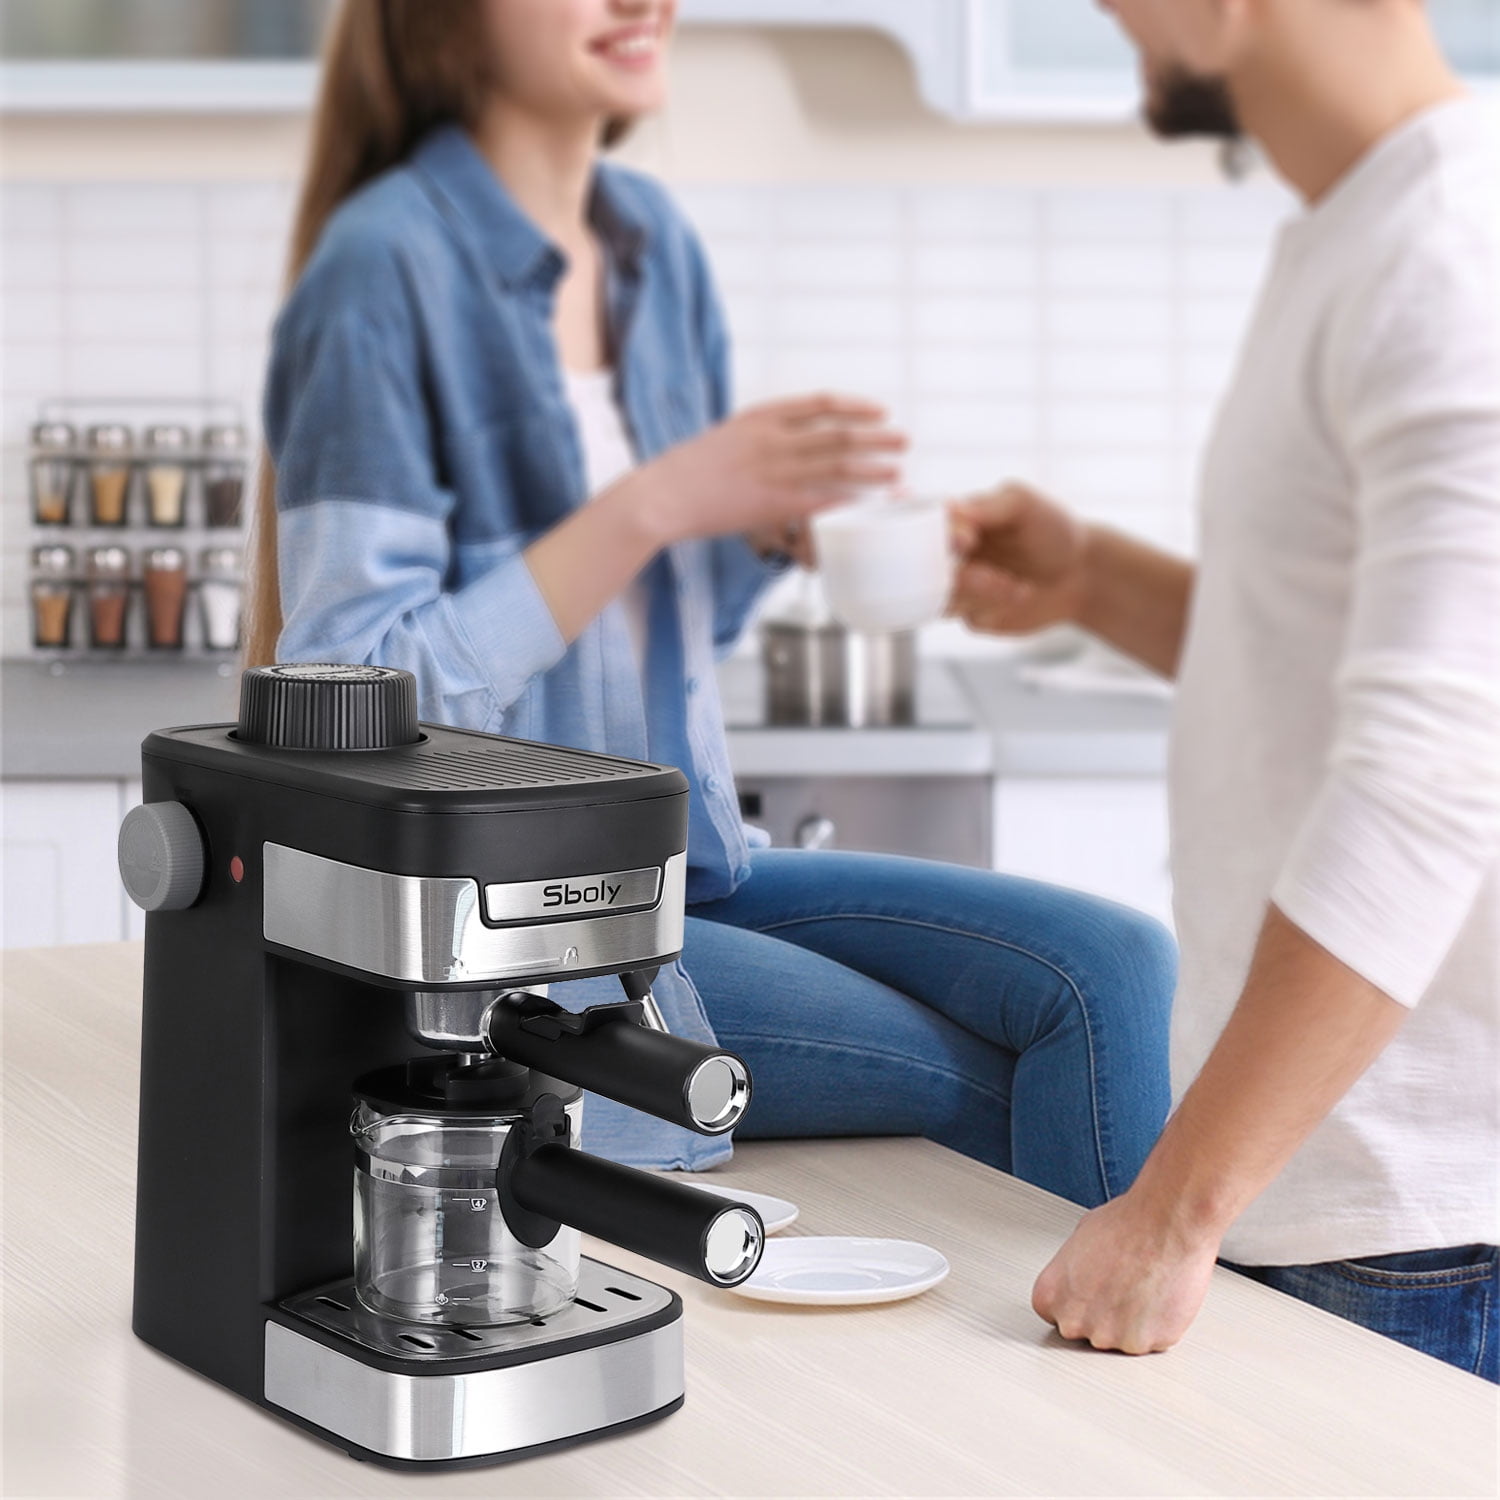 LePresso One Cup Coffee Maker 125mL 350W - Black – Xpressouq